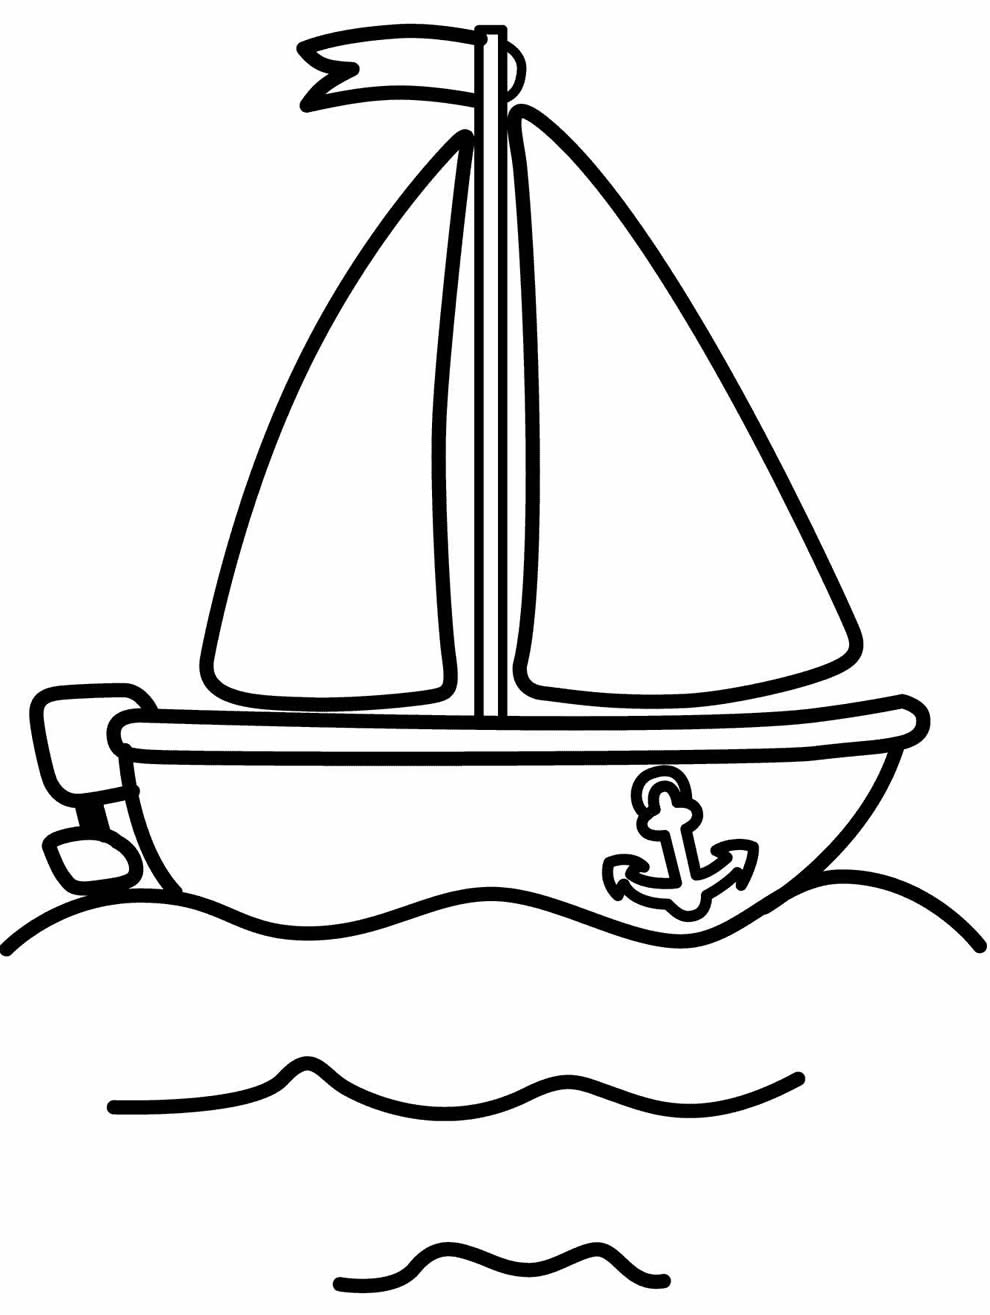 Desenho de Barco para colorir